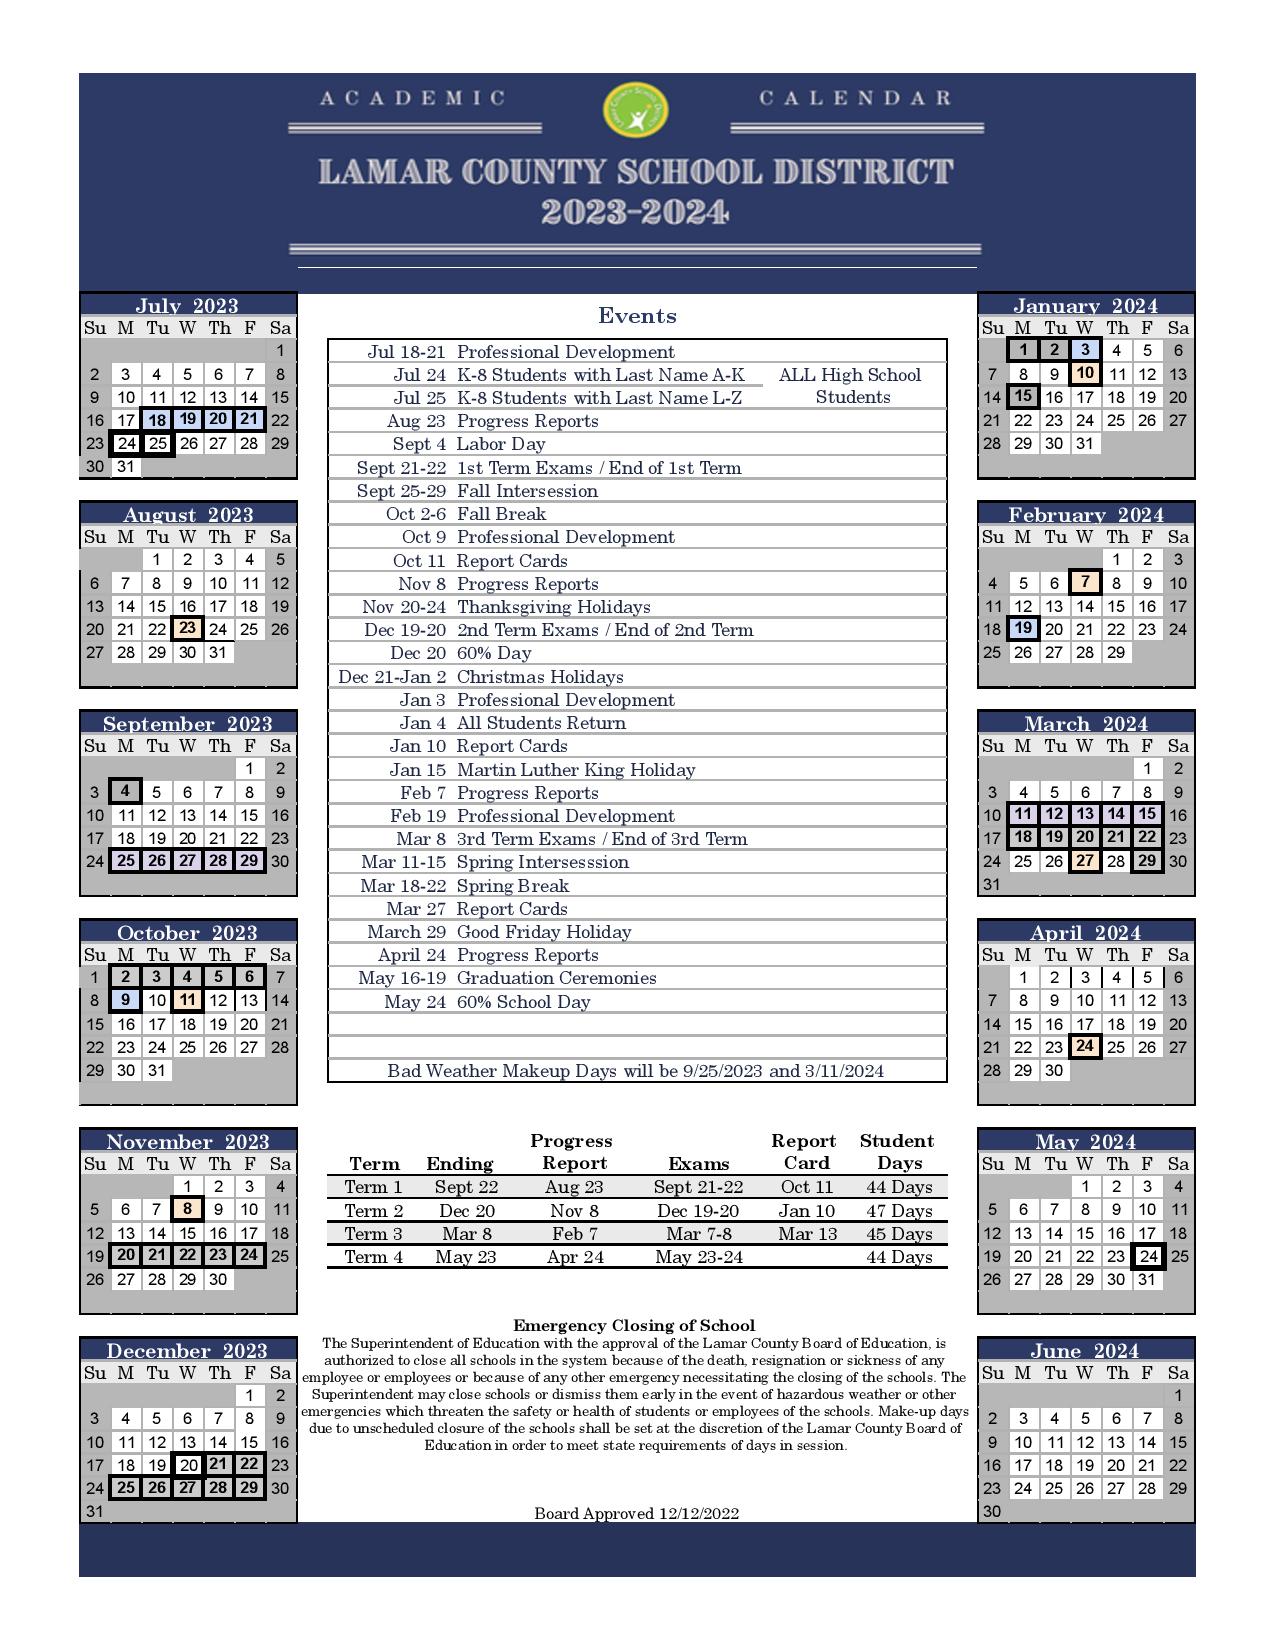 Lamar County Schools Calendar 20232024 in PDF